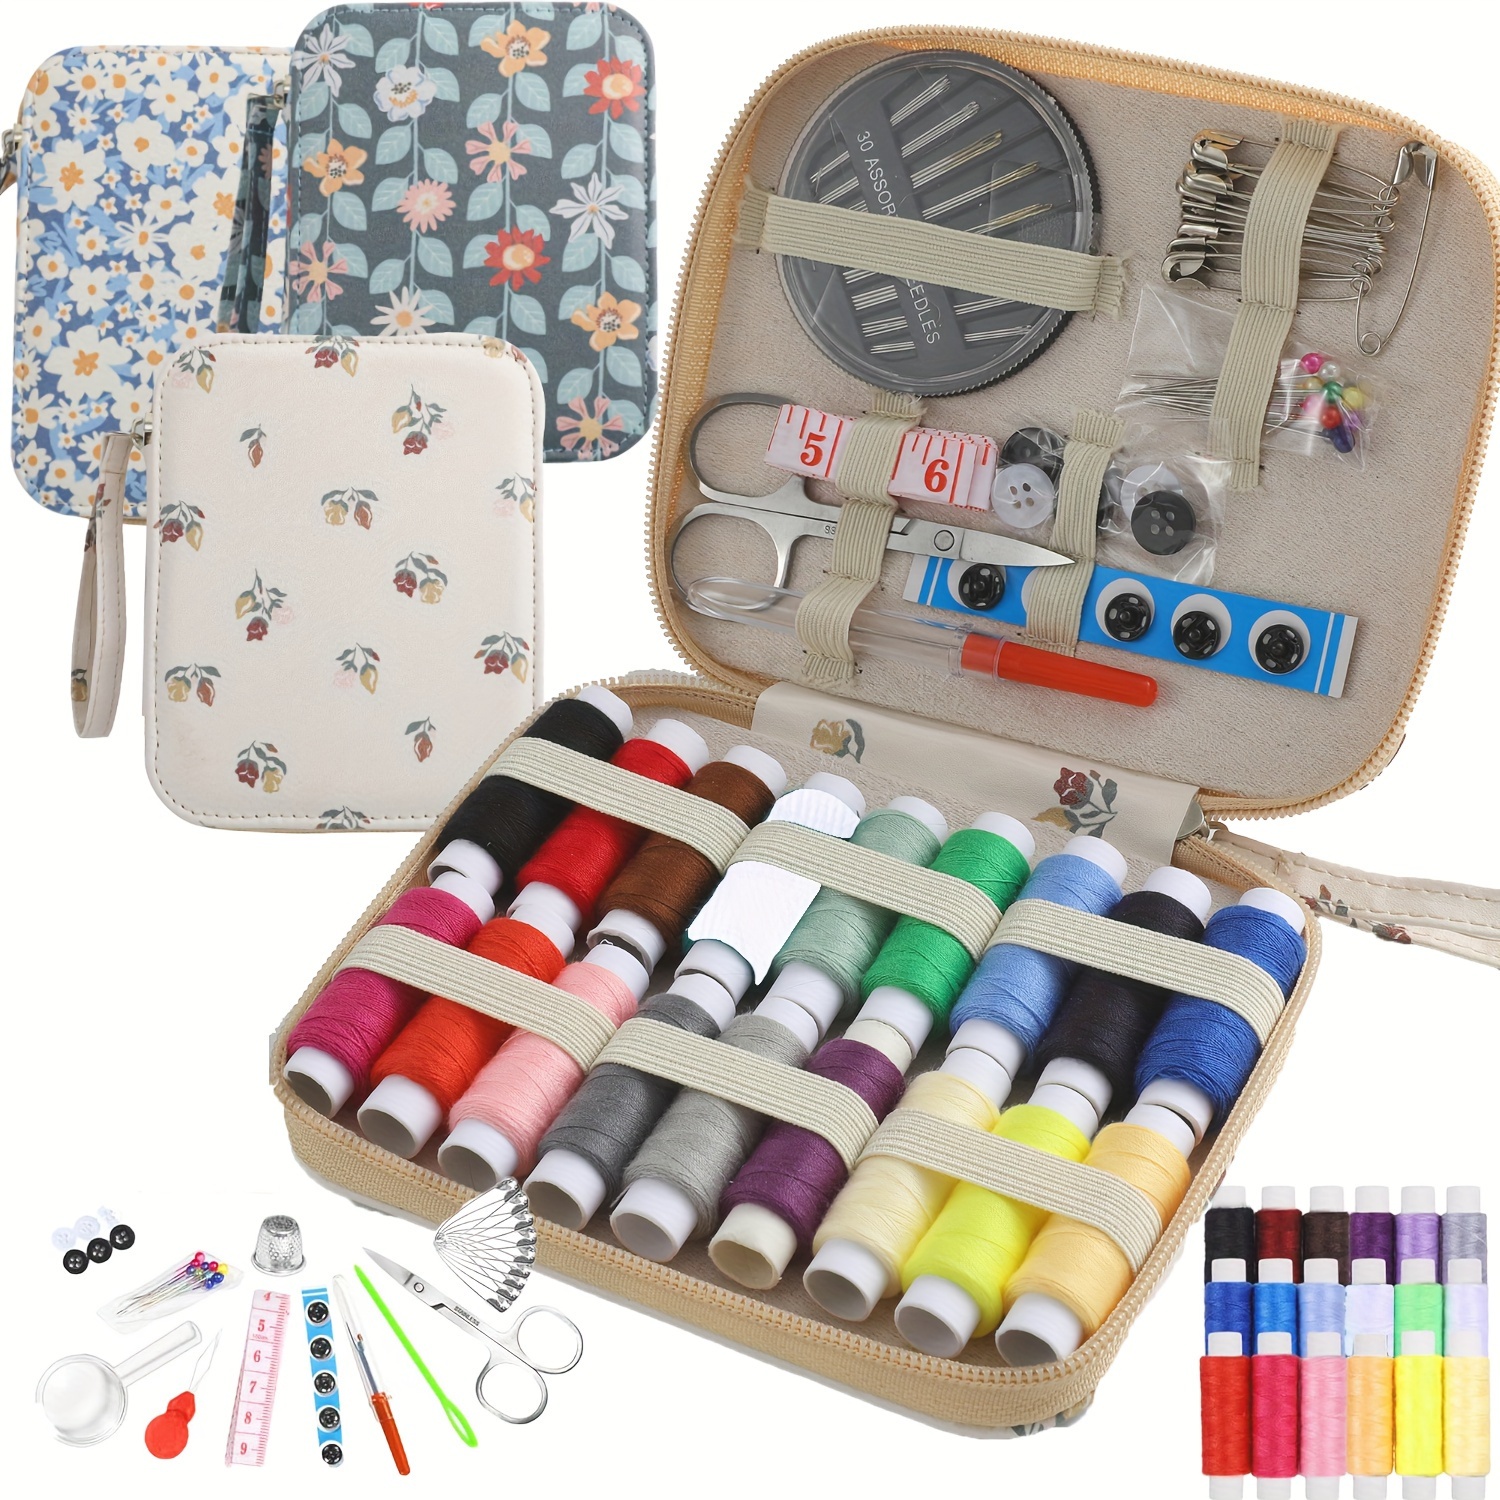 Kit de costura de viaje portátil, suministros de costura DIY con accesorios  de costura, estuche de Mini kit de costura para principiantes, viajeros